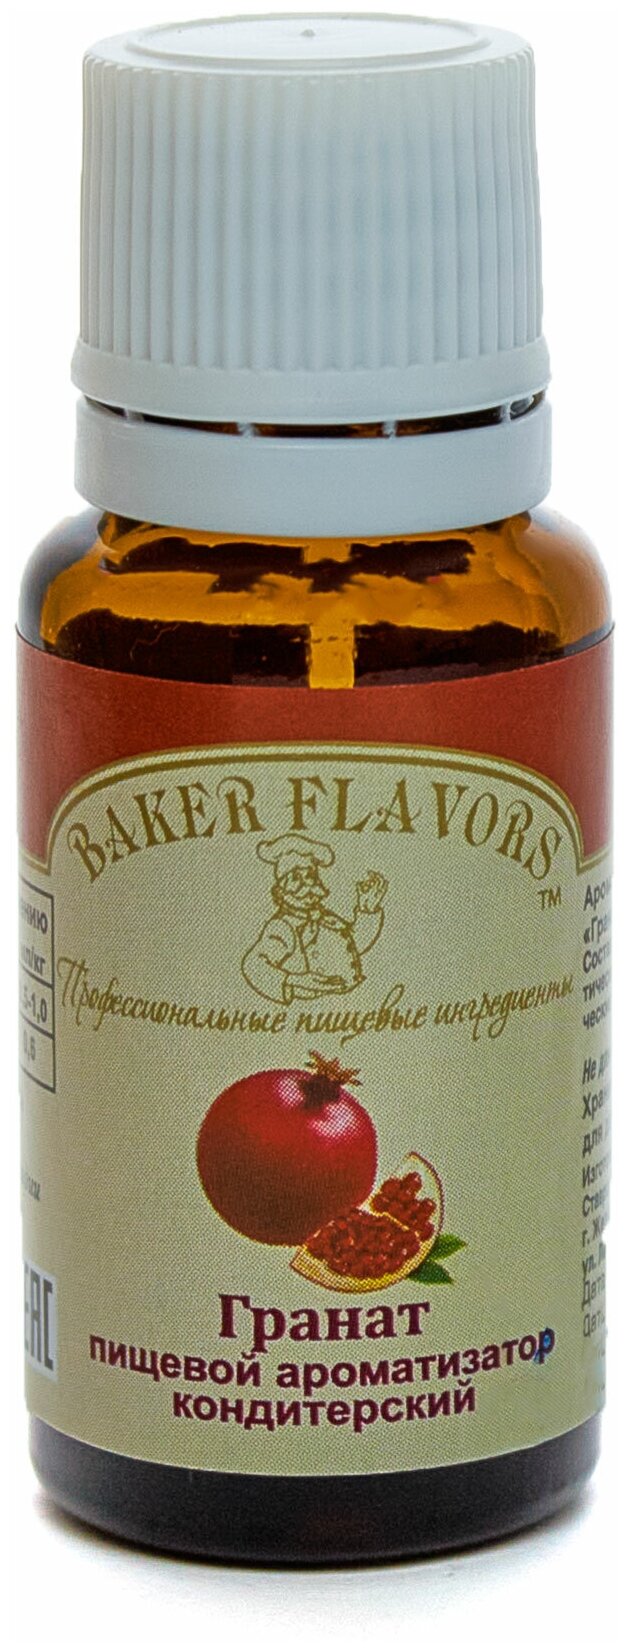 Baker Flavors ароматизатор пищевой Гранат, 10 мл